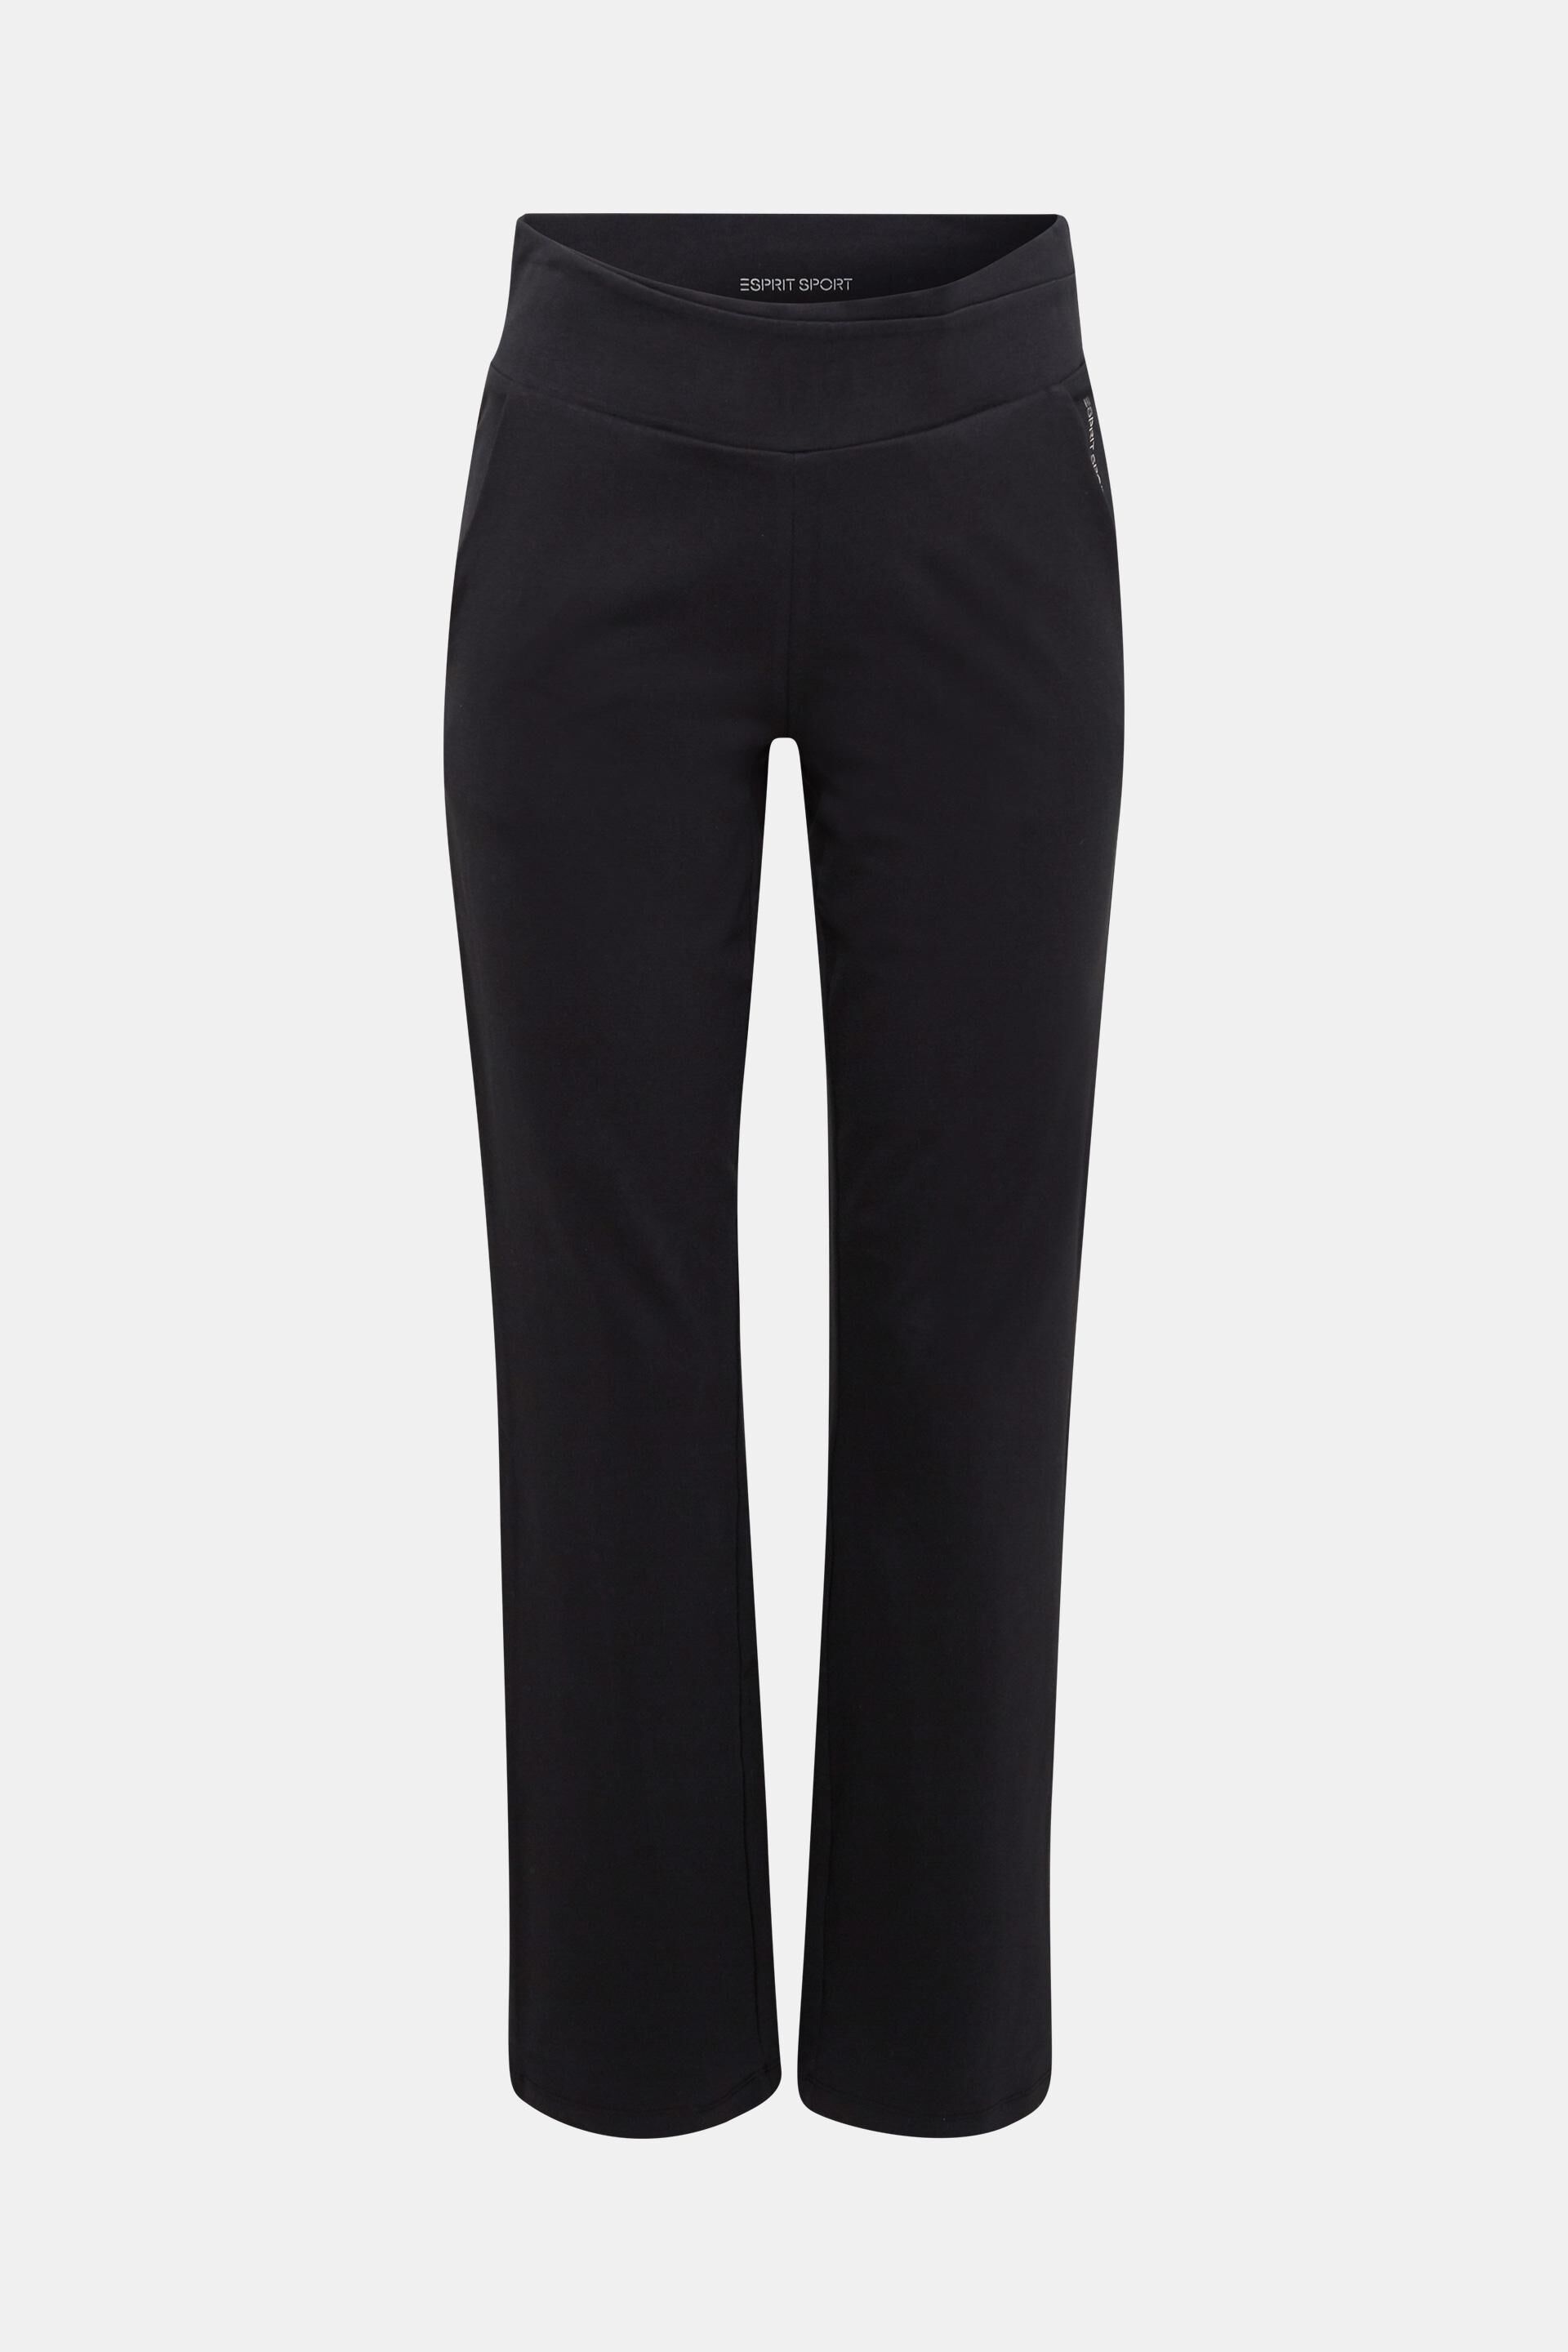 Esprit Sports Trousers  black  Zalandode